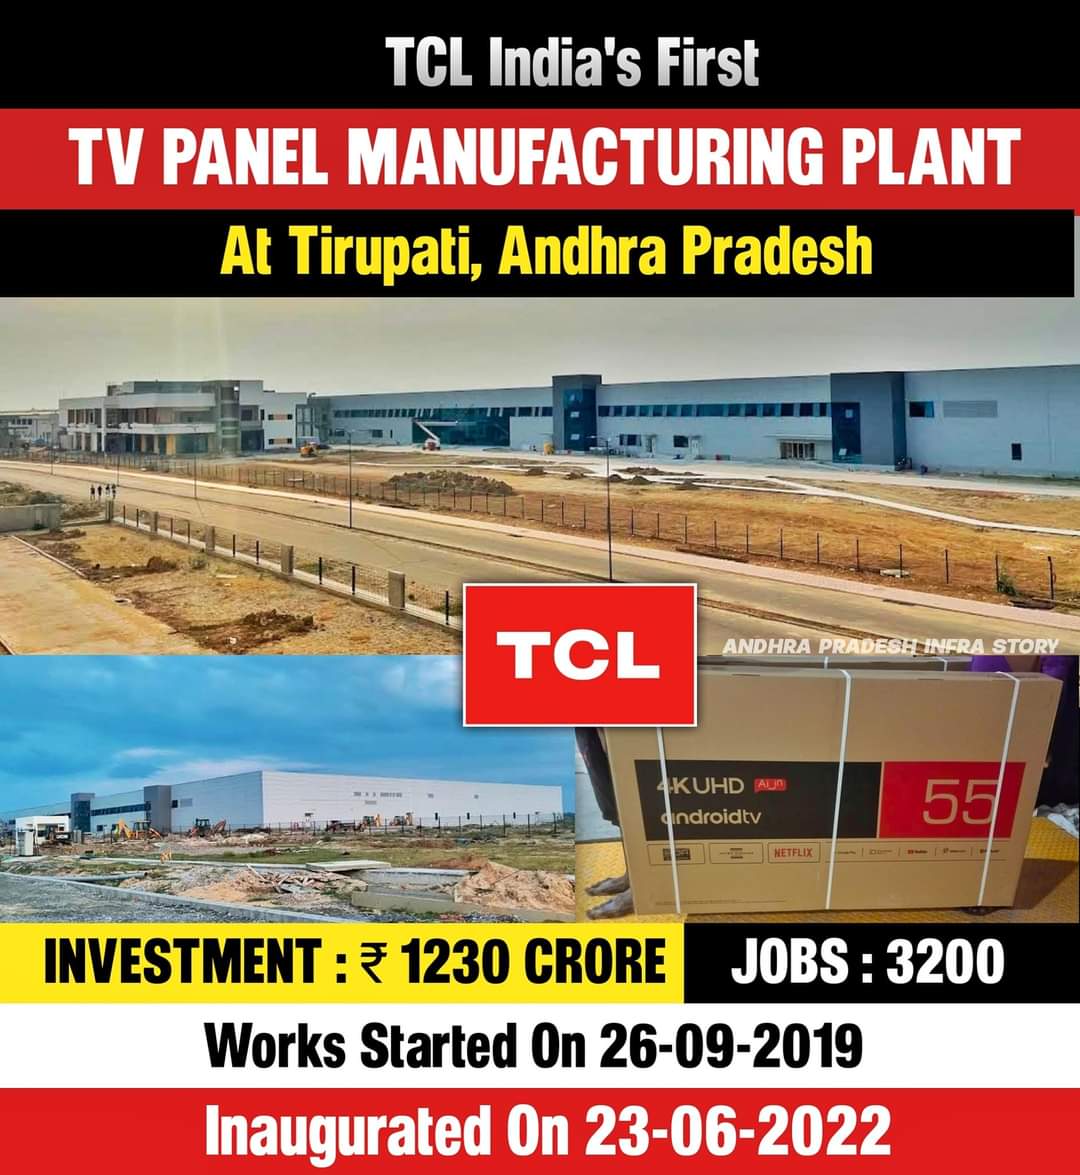 🔸 Tirupati Emerging As A Electronics Manufacturing Hub 😍 

#AndhraPradesh #TCL #TVManufacturing #Tirupati #AdvantageAP #APInfraStory #YSRCPSocialMediaKanigiri